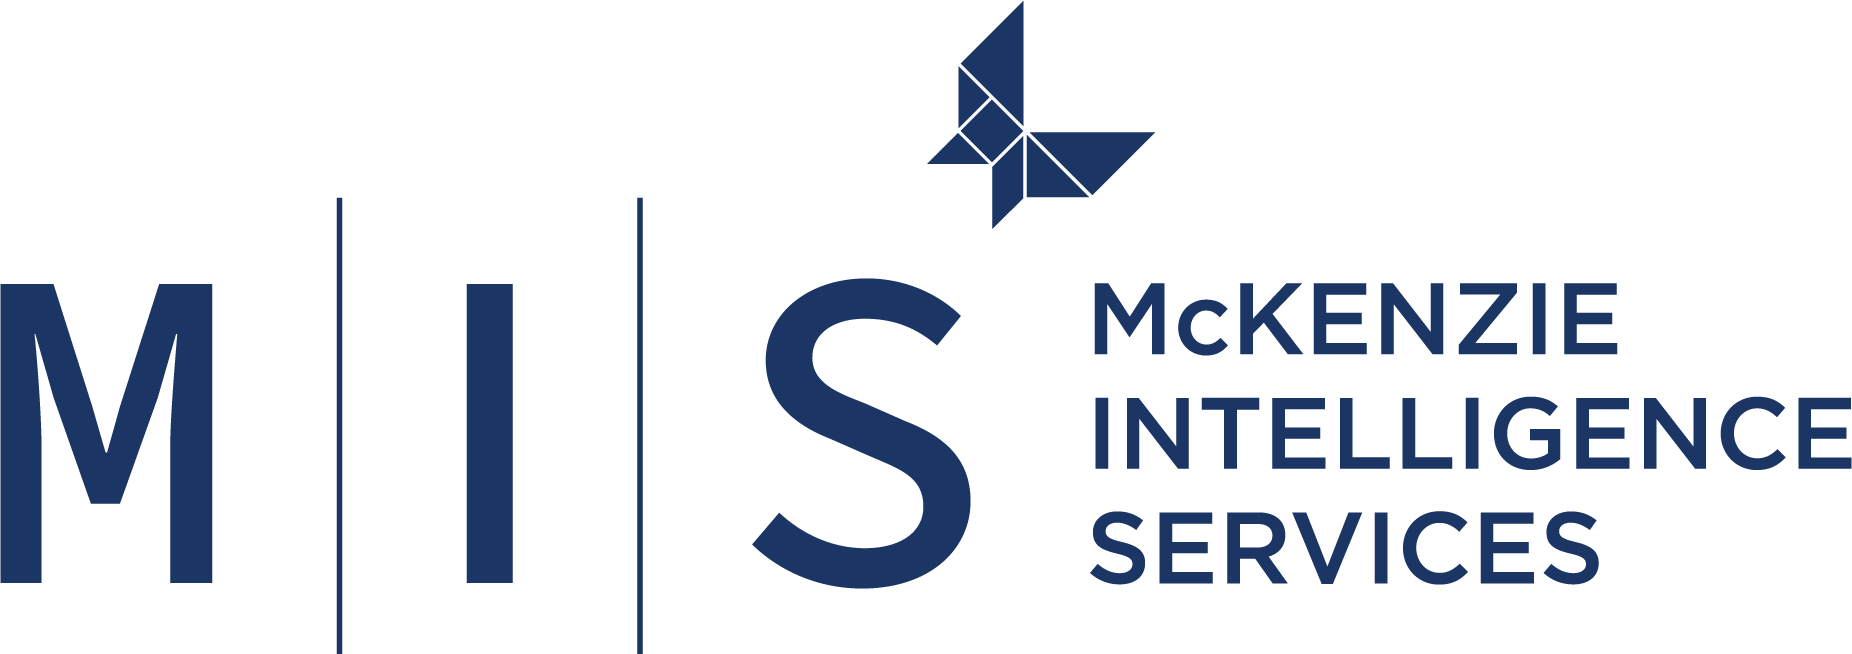 McKenzie Intelligence Services company logo